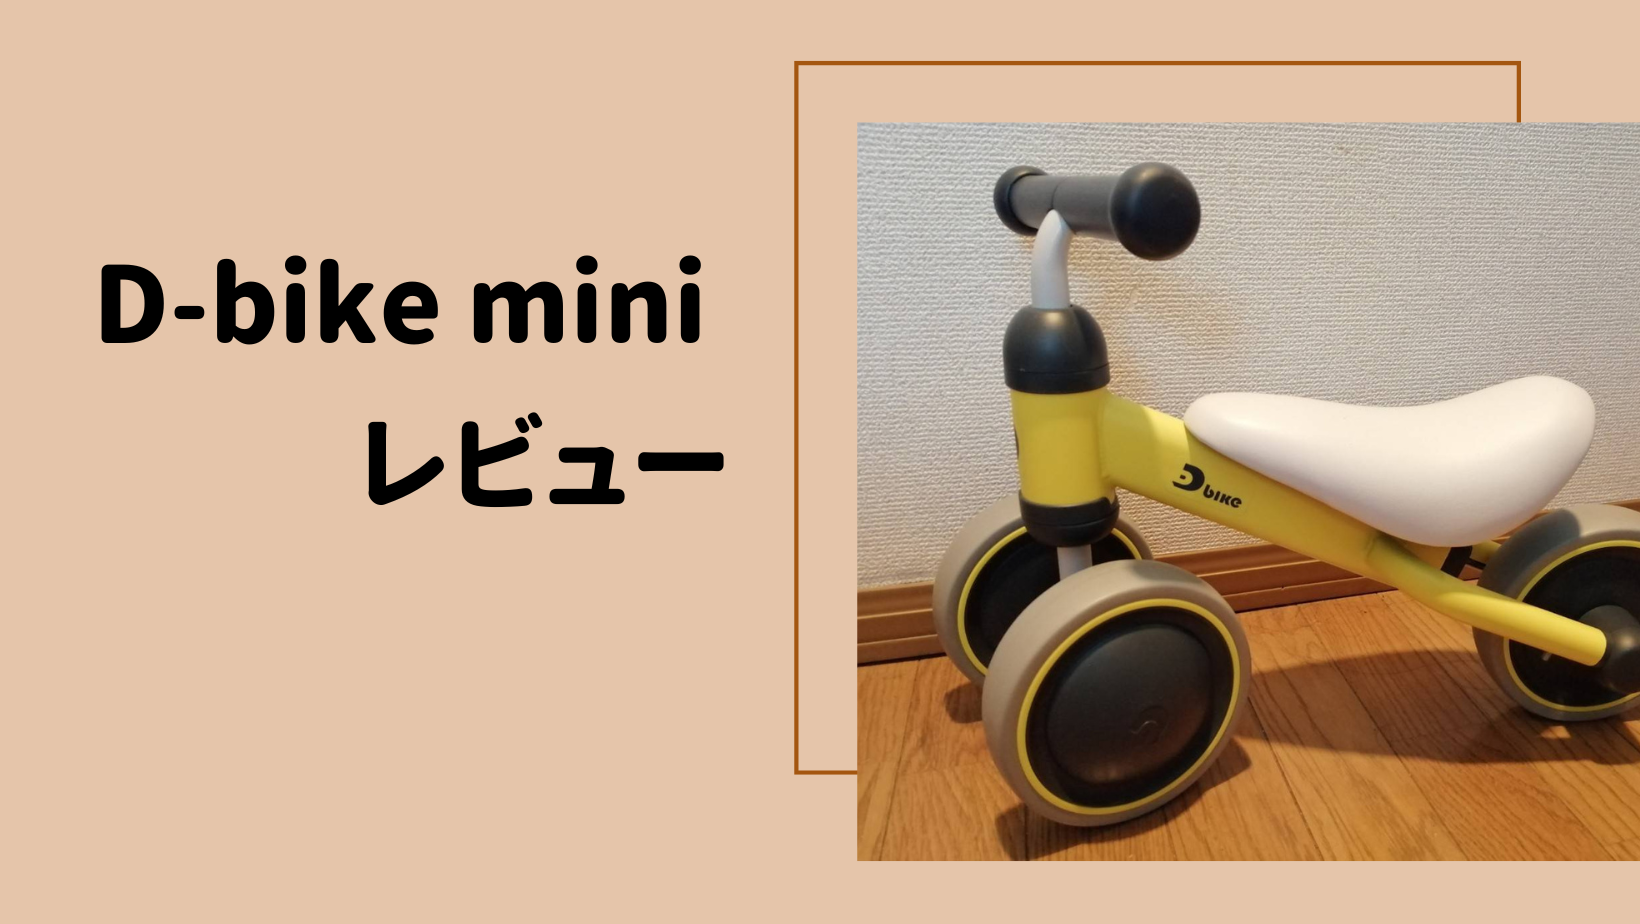 D-bike miniは初めての自転車におすすめ 1歳の娘に購入した感想 